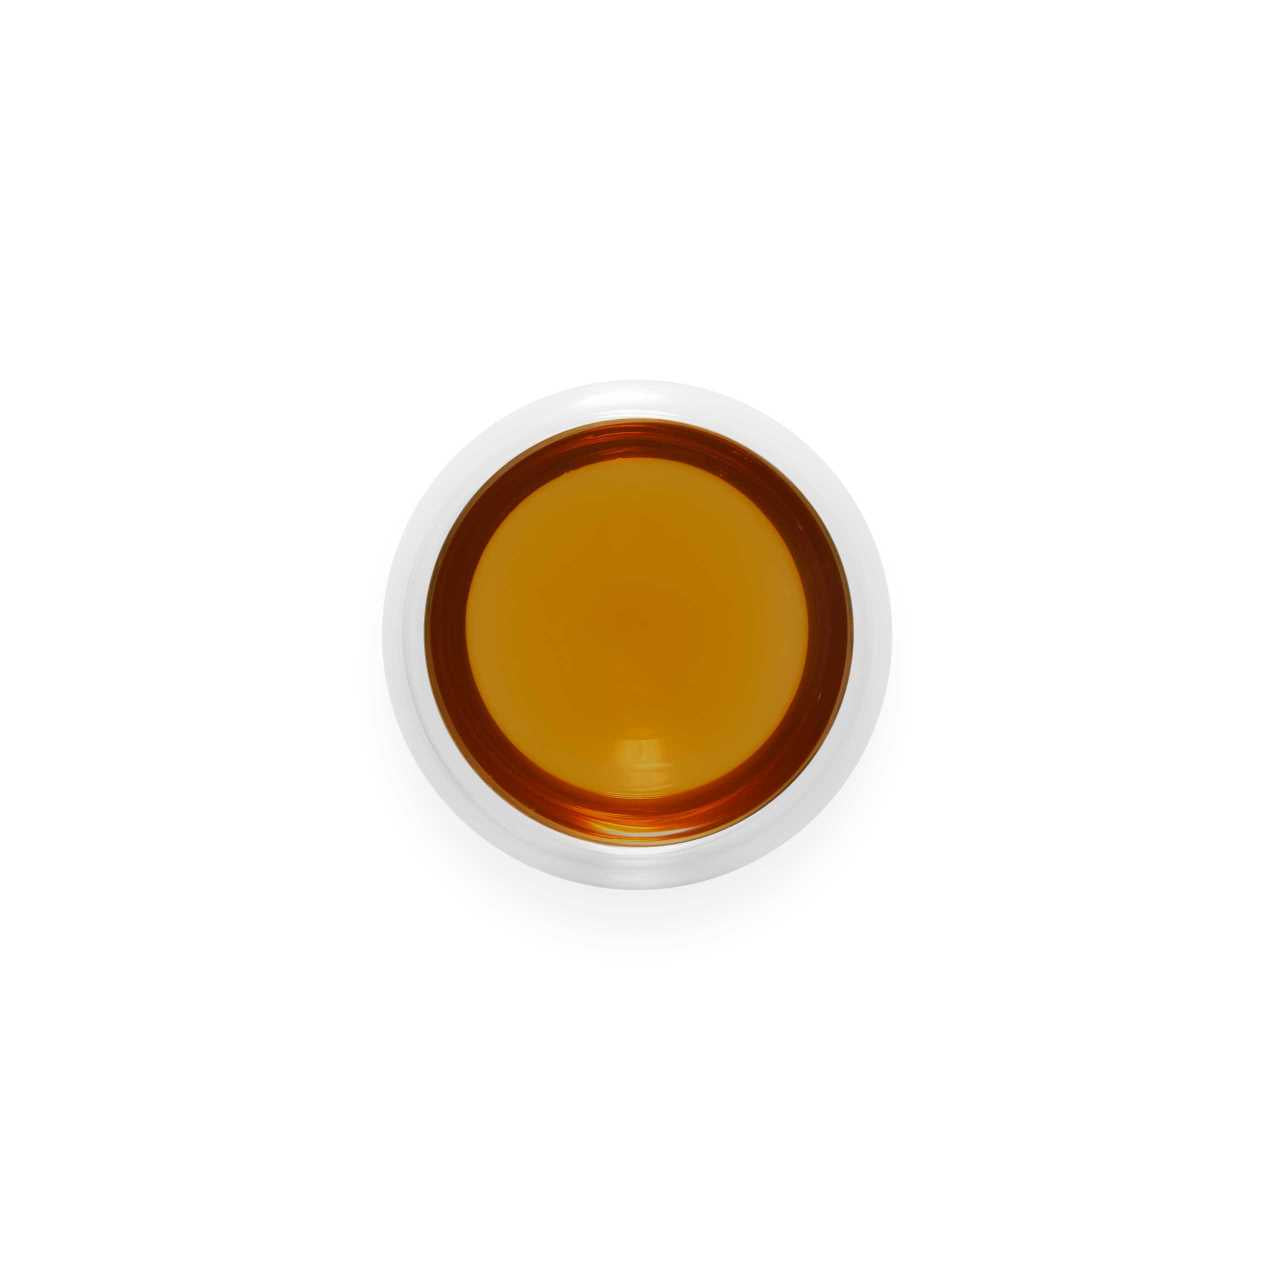 Lincang Ripe Pu-Erh Loose Leaf tea infusion in a glass cup